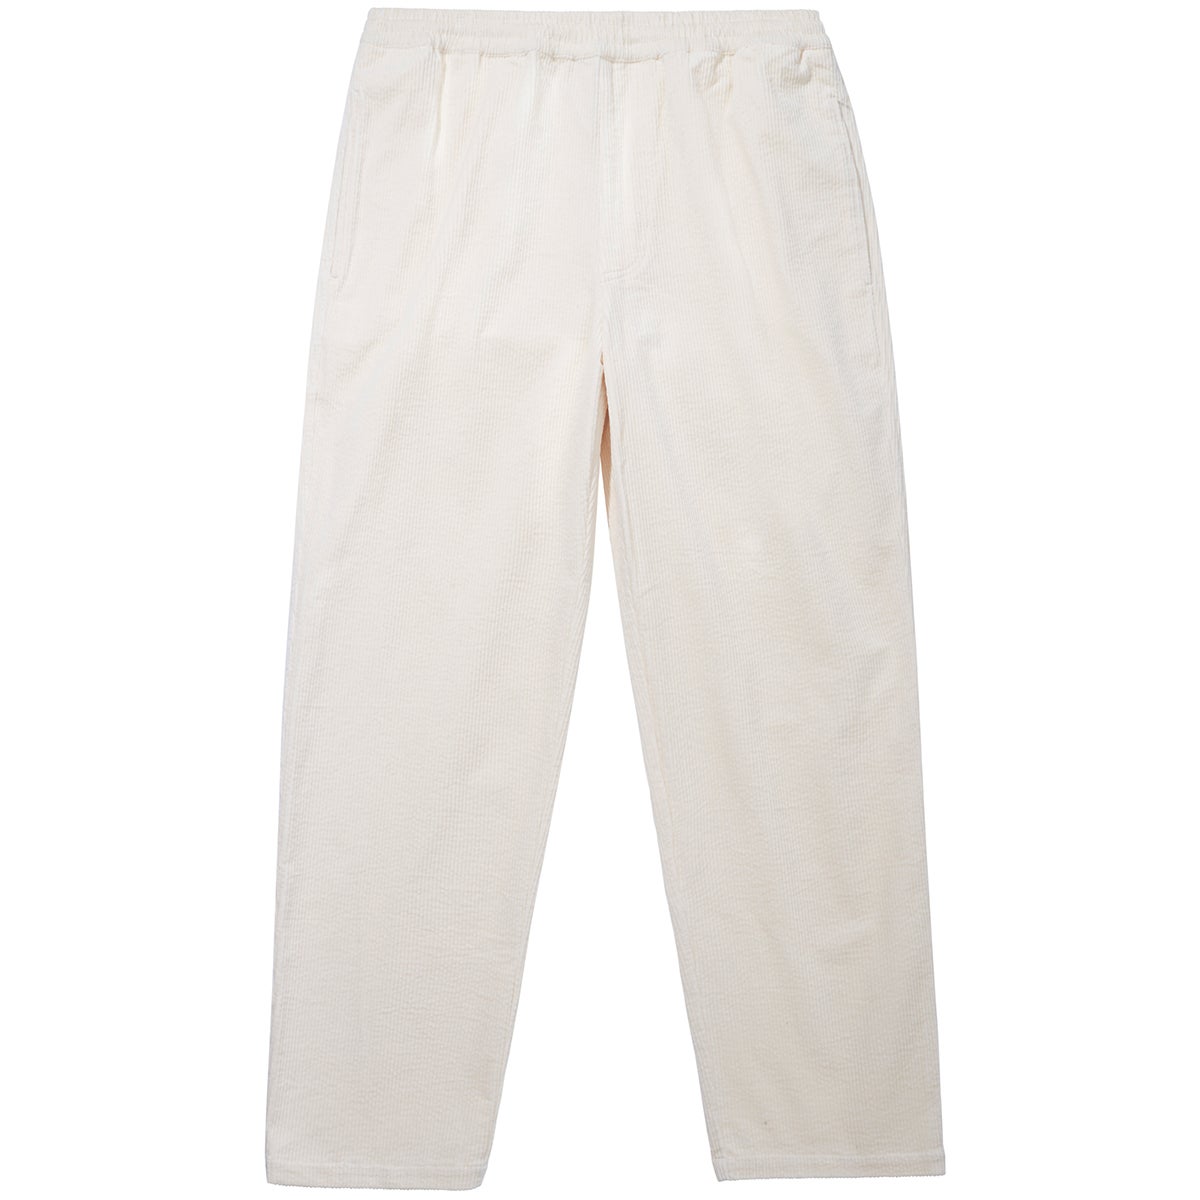 Grand Corduroy Pant in Cream | Boardertown